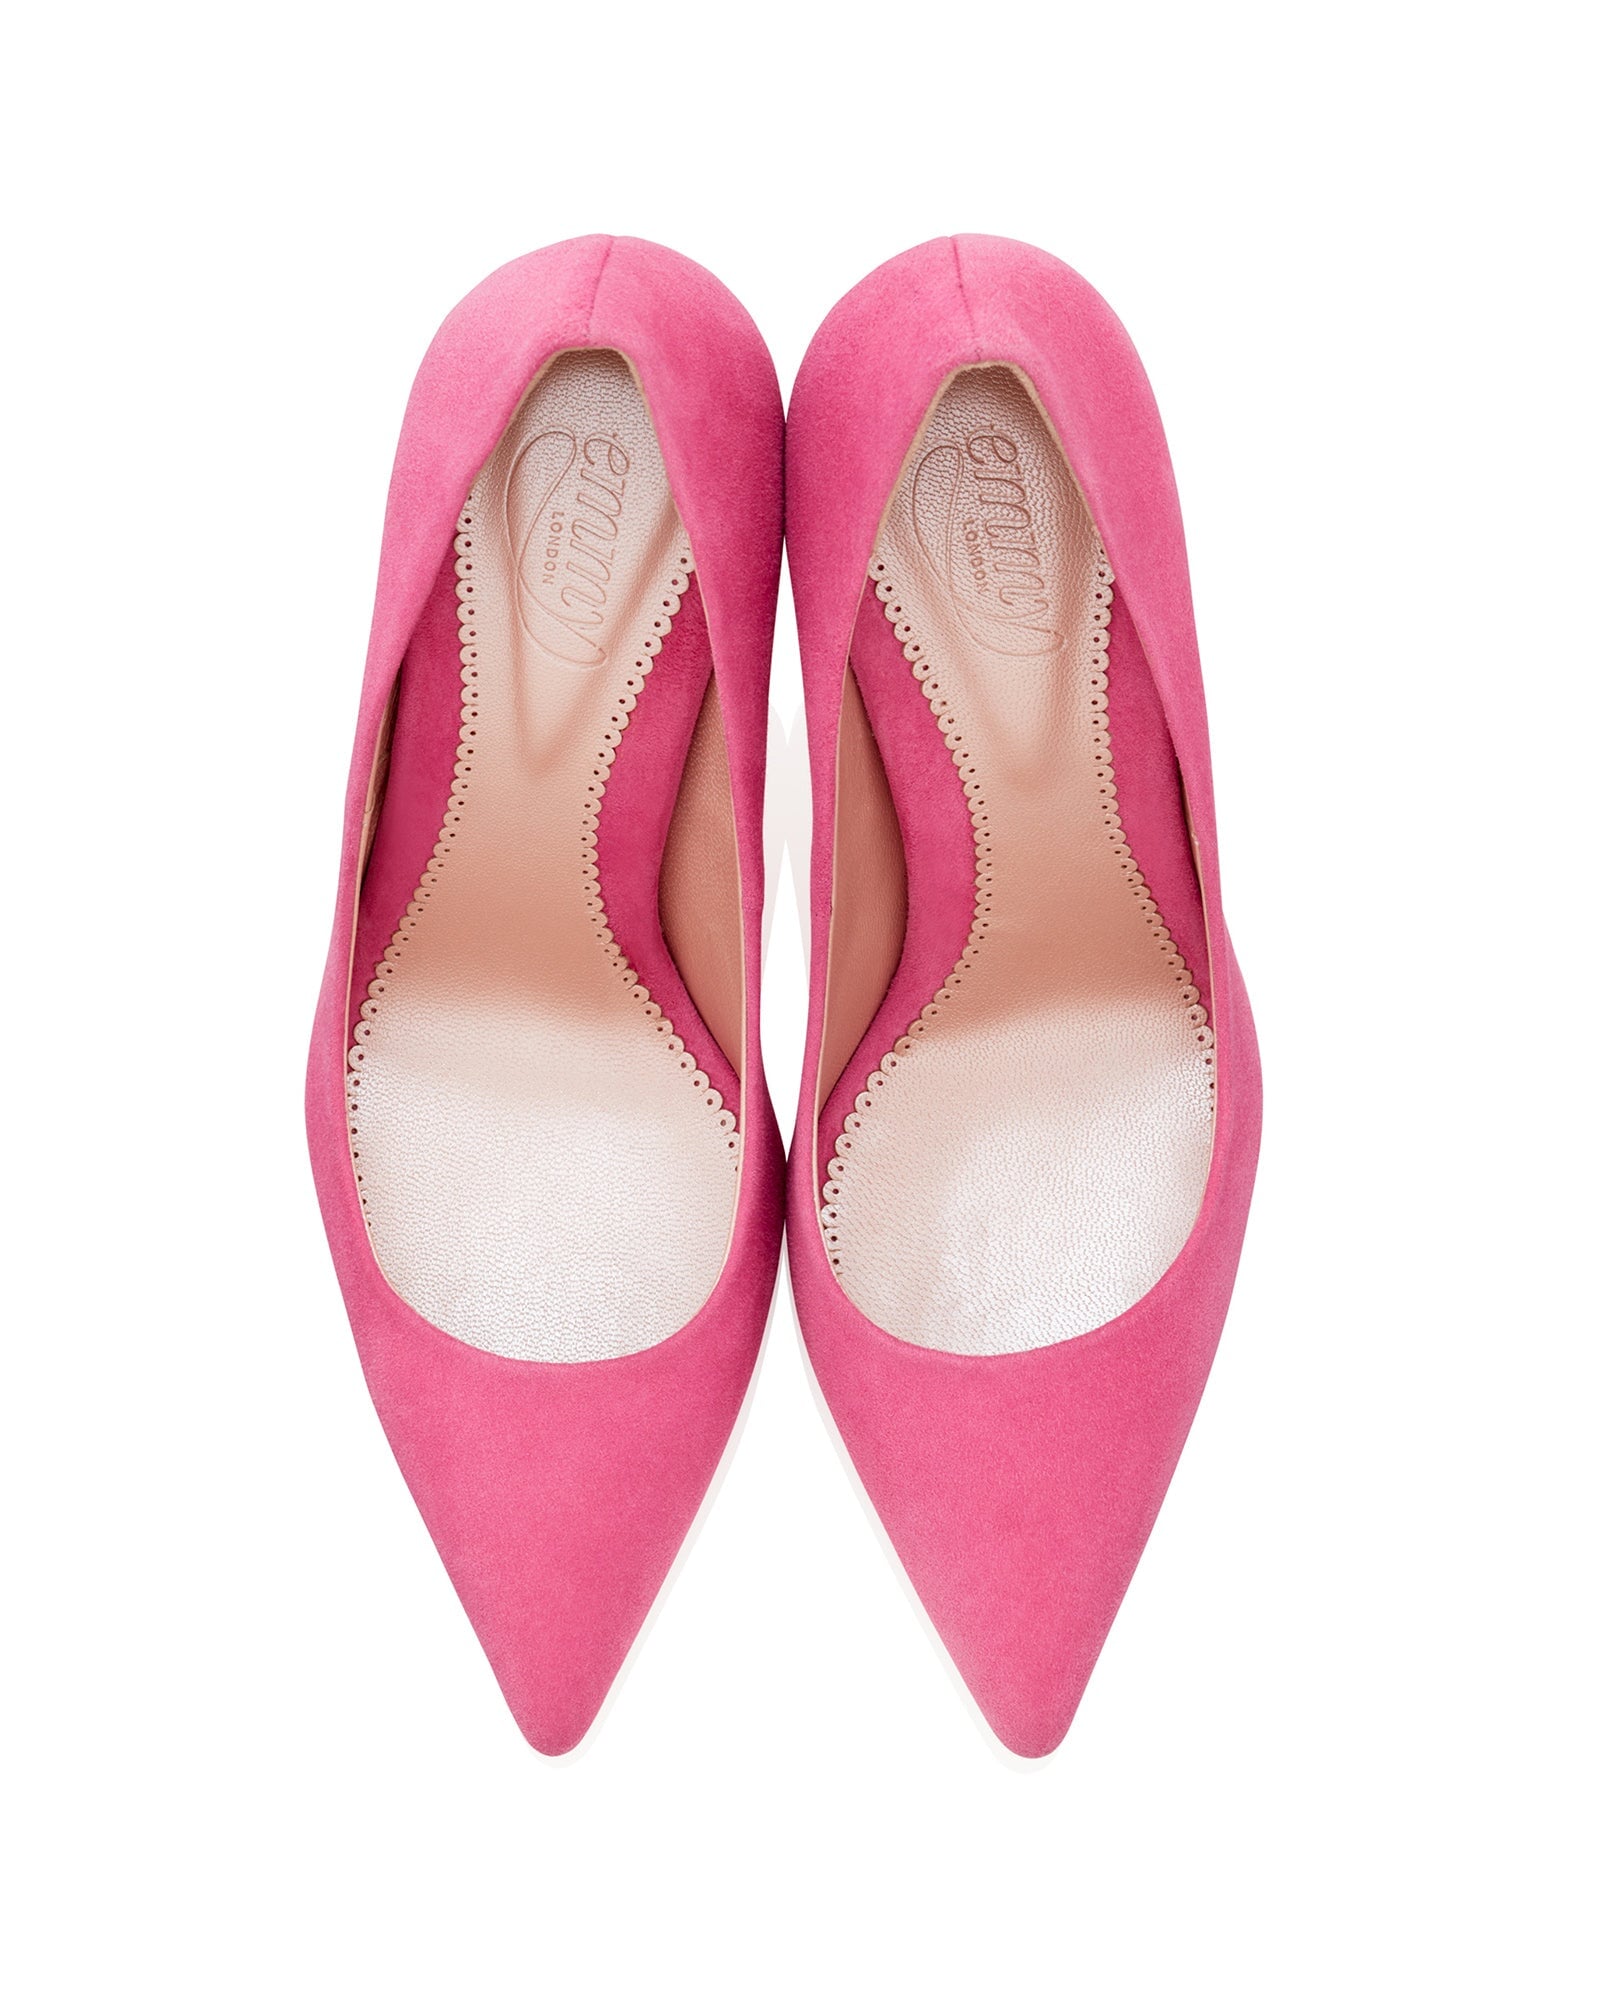 Rebecca Cupcake Fashion Shoe Bright Pink Pointed High Heel Court Shoe  image